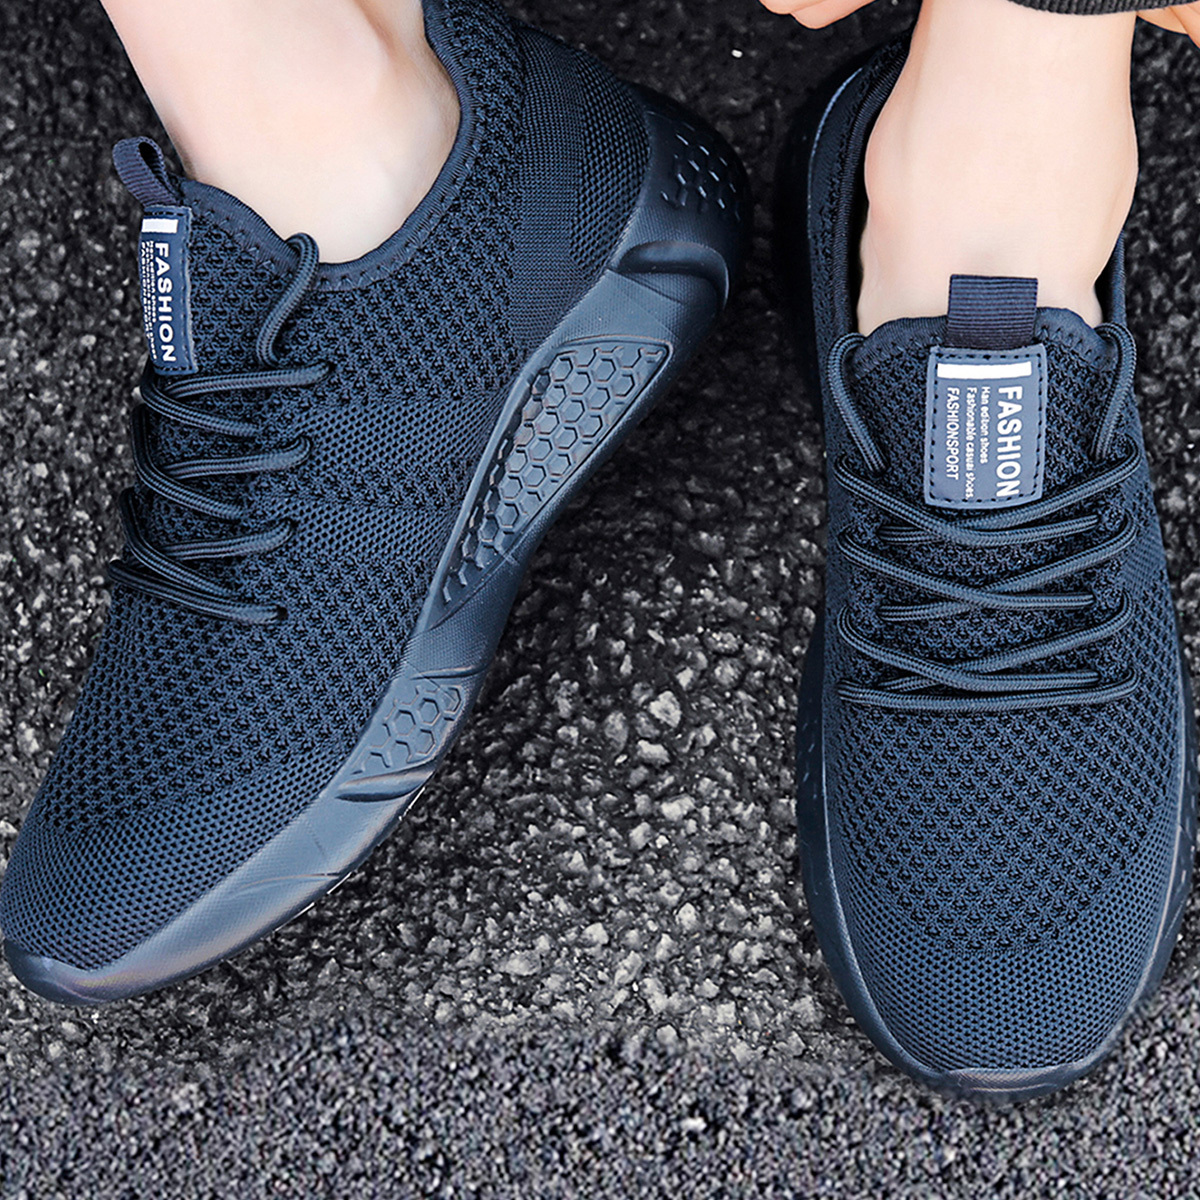 mens lightweight breathable shoes for jogging running walking details 16